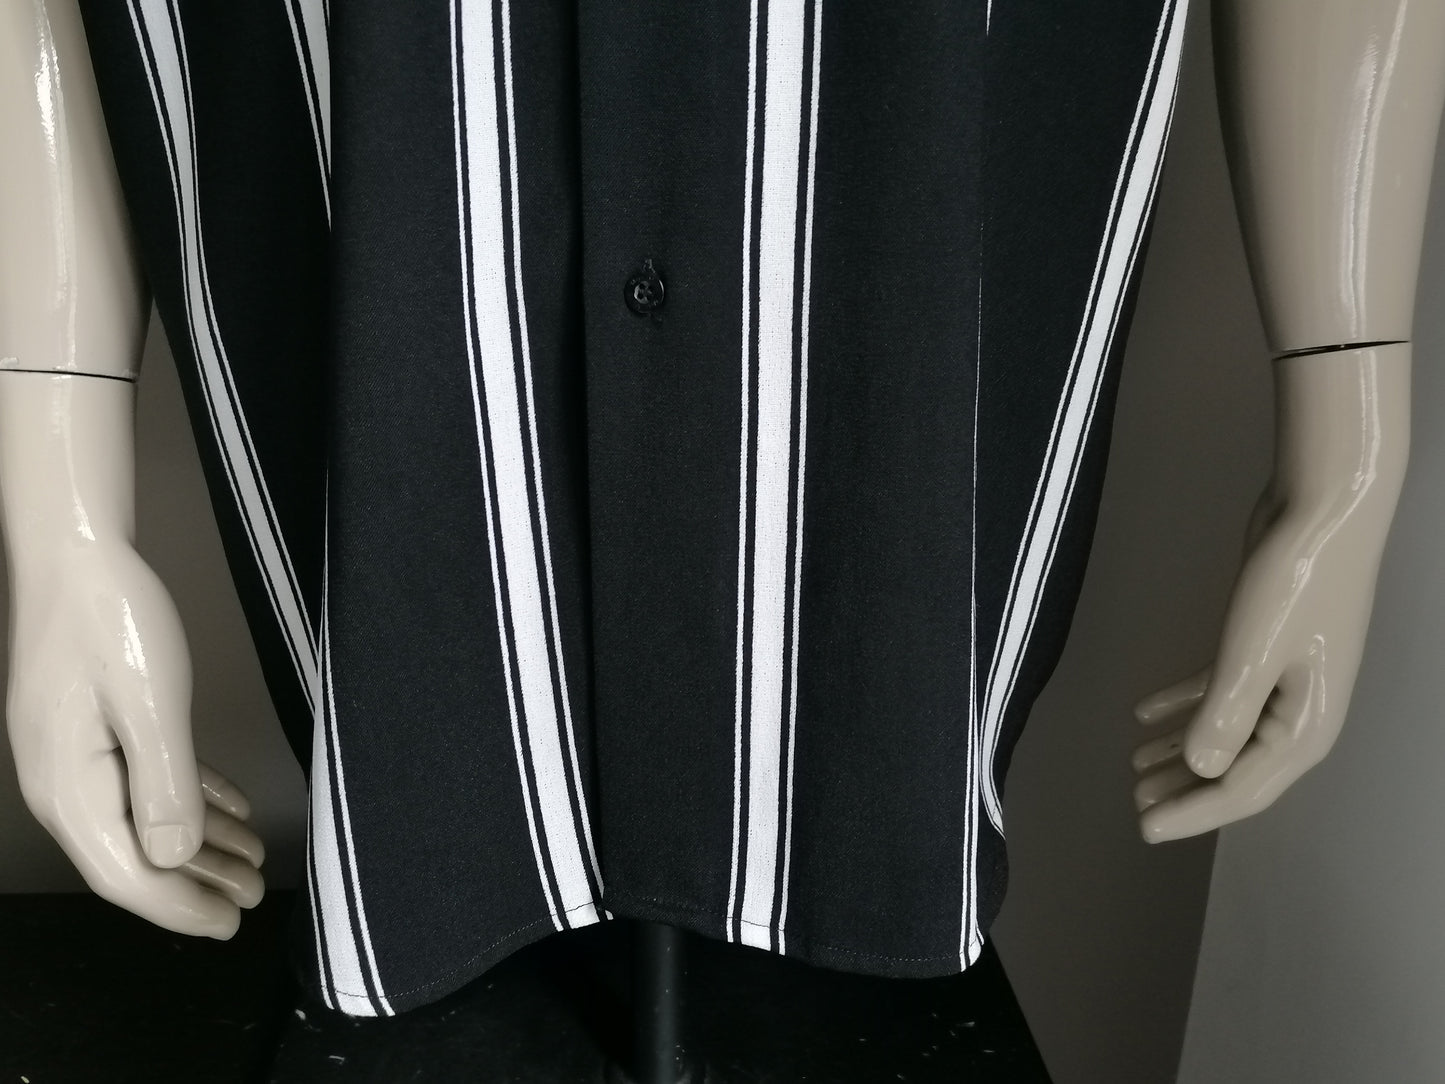 Max Mara Vintage Shirt short sleeve. Black and white striped. Size XL.